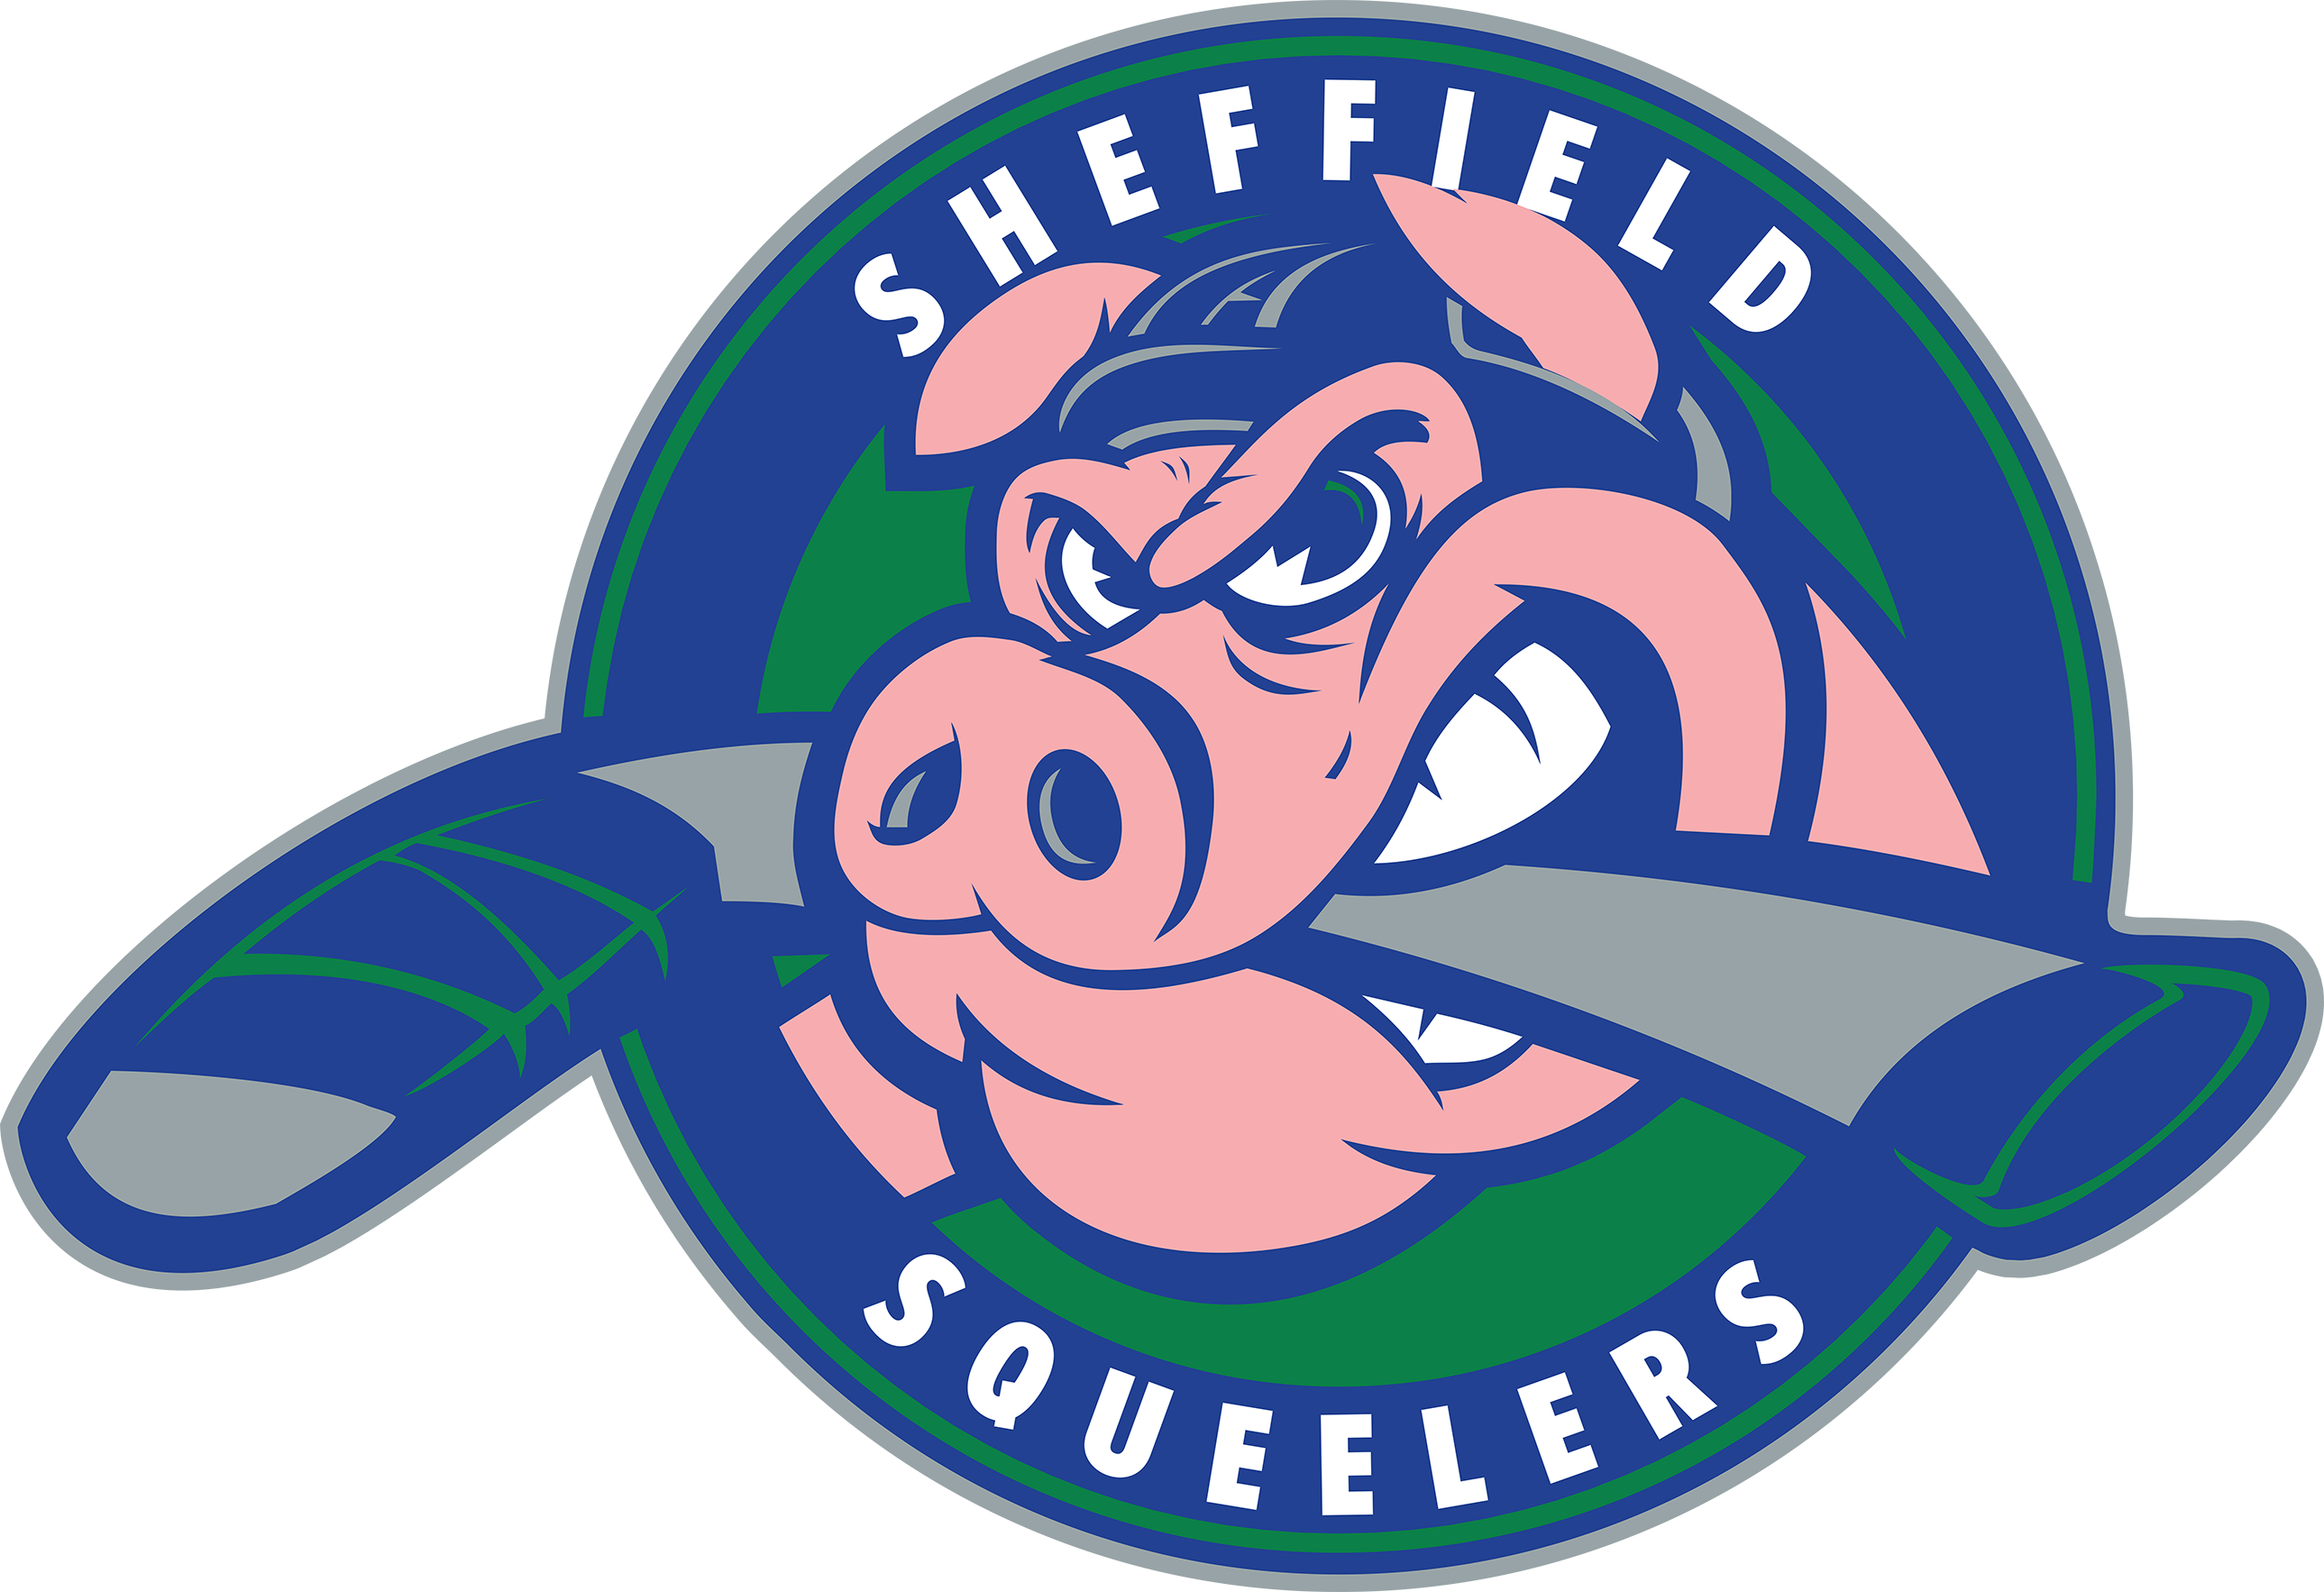 Sheffield Squeelers